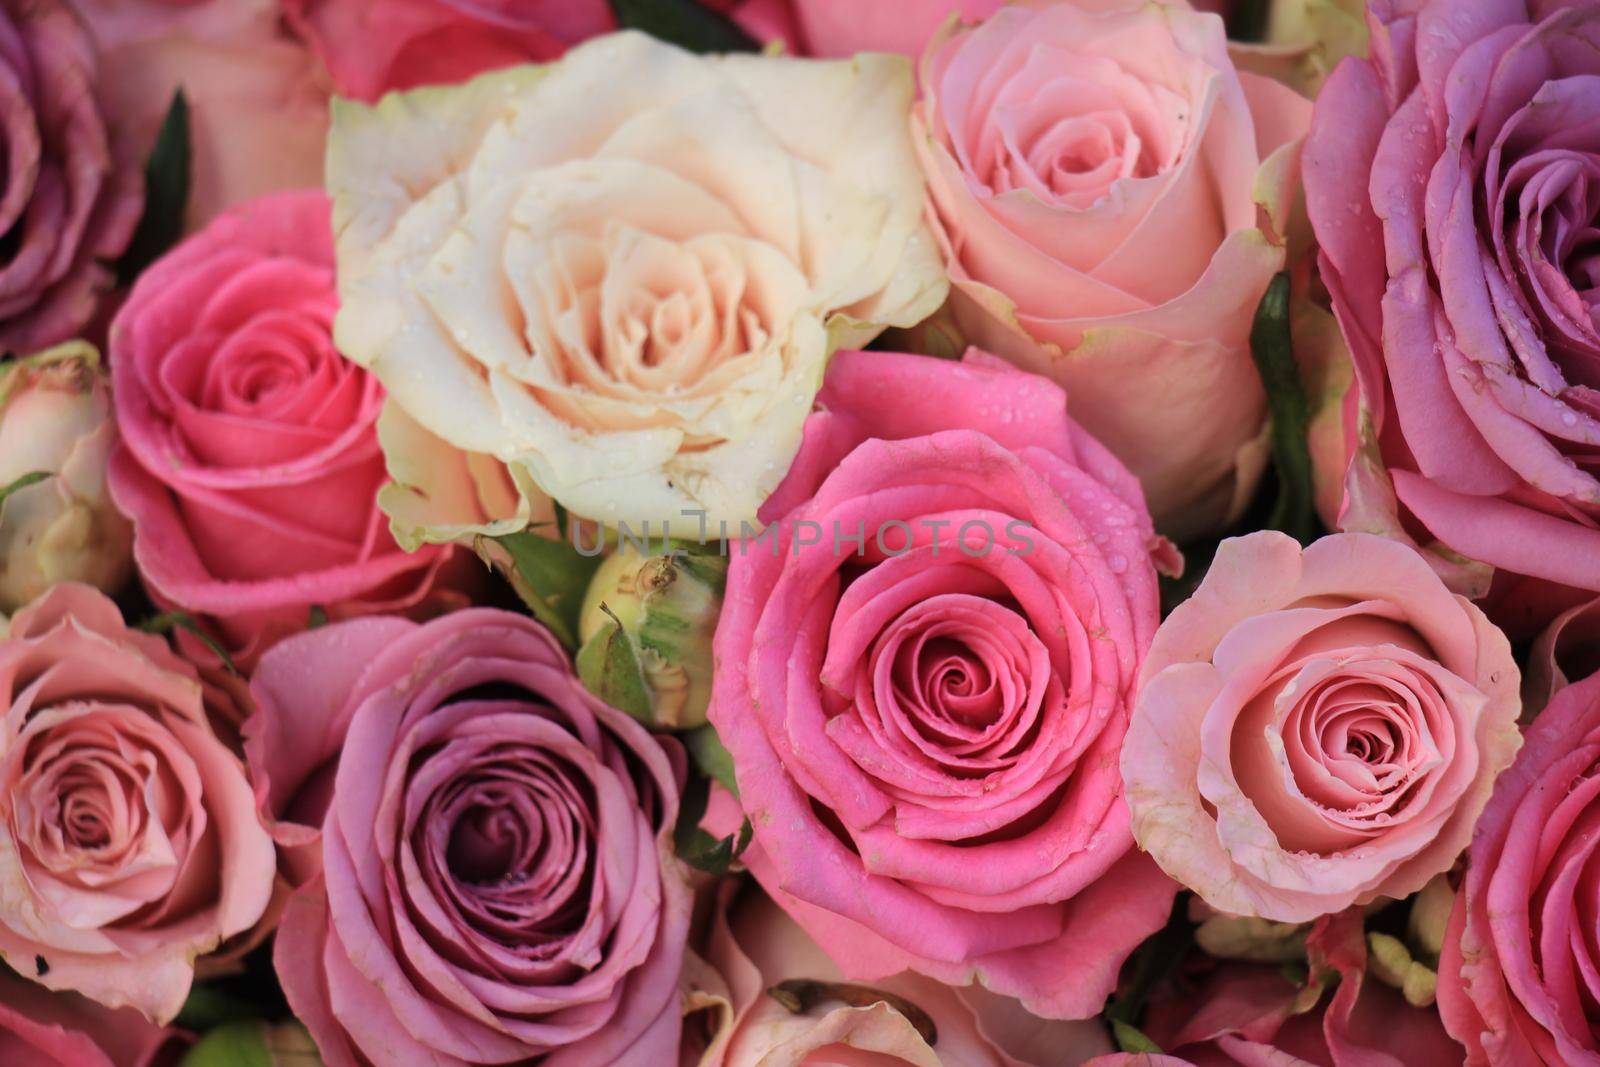 Mixed pink roses by studioportosabbia